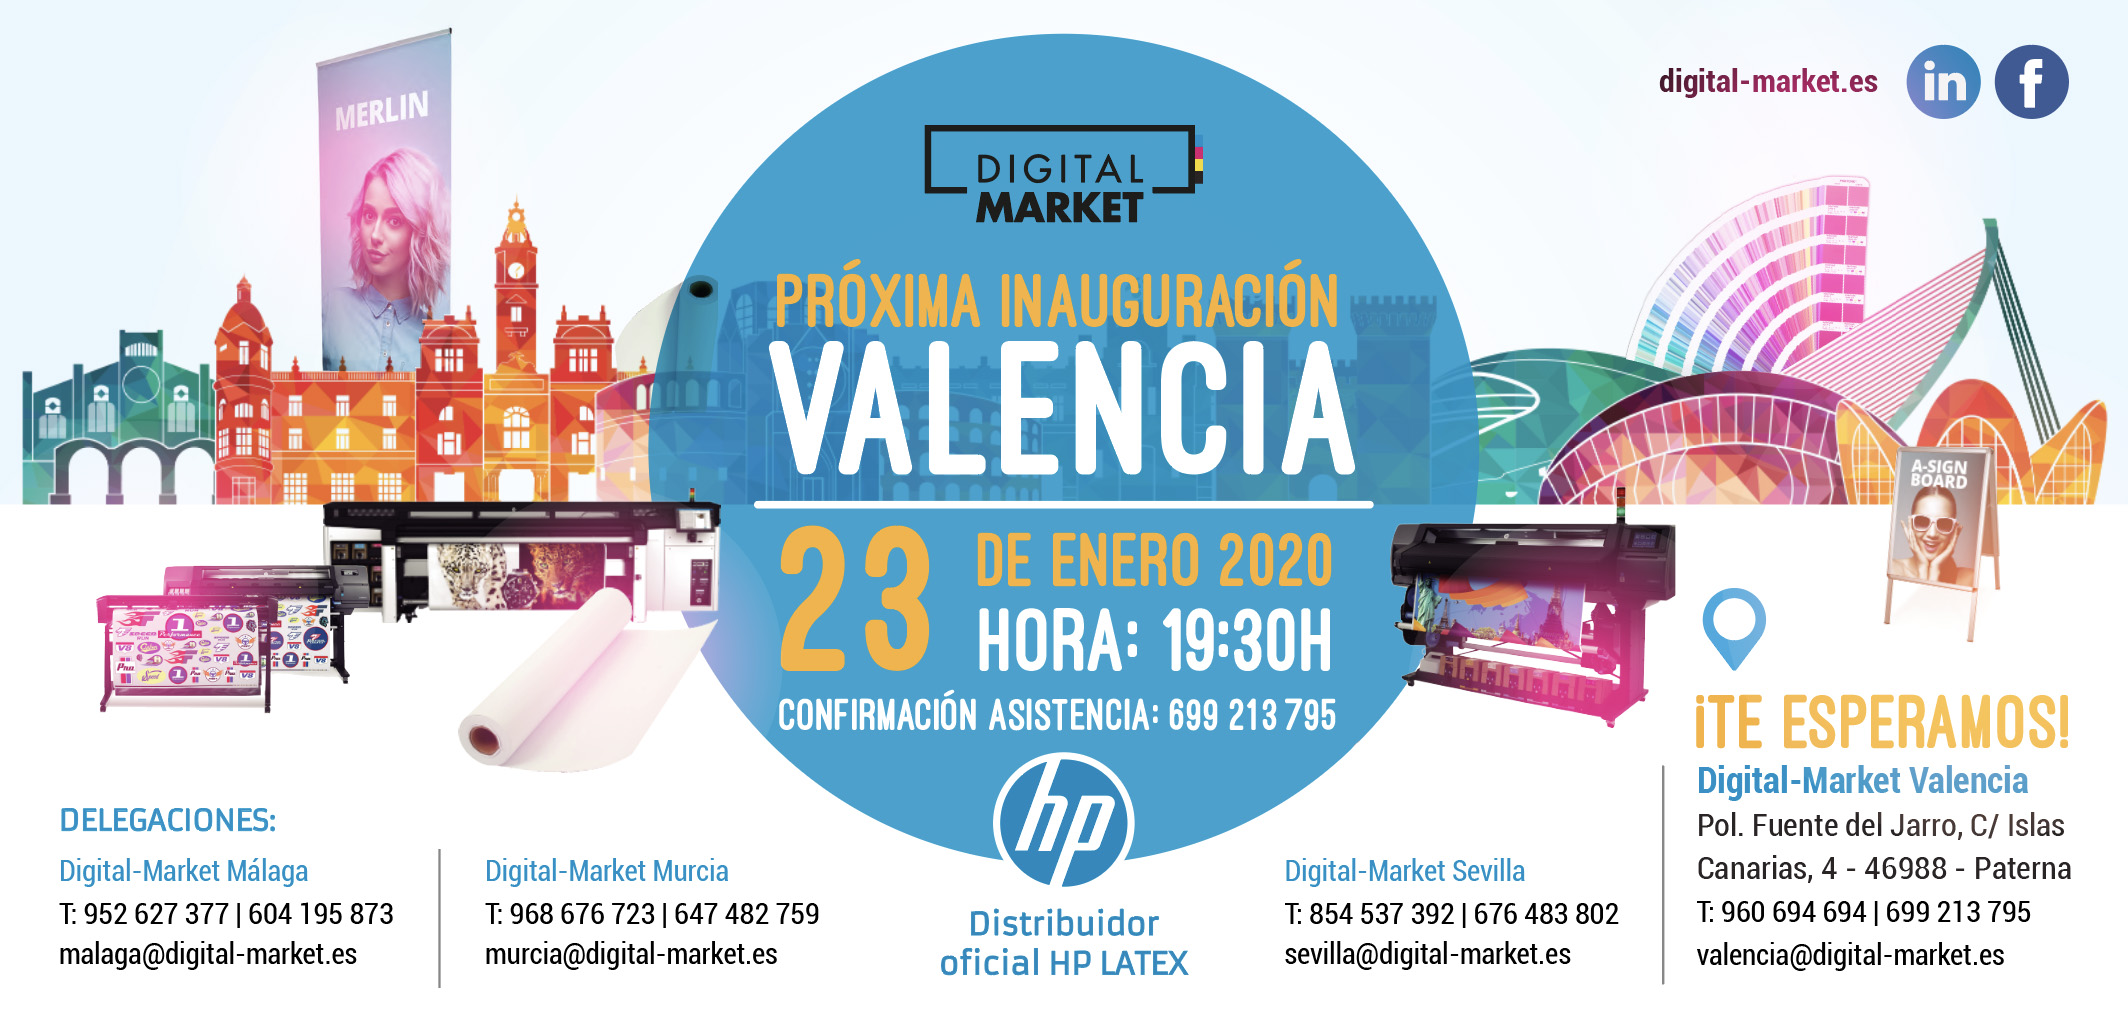 Invitacion-digital-market-valencia copia